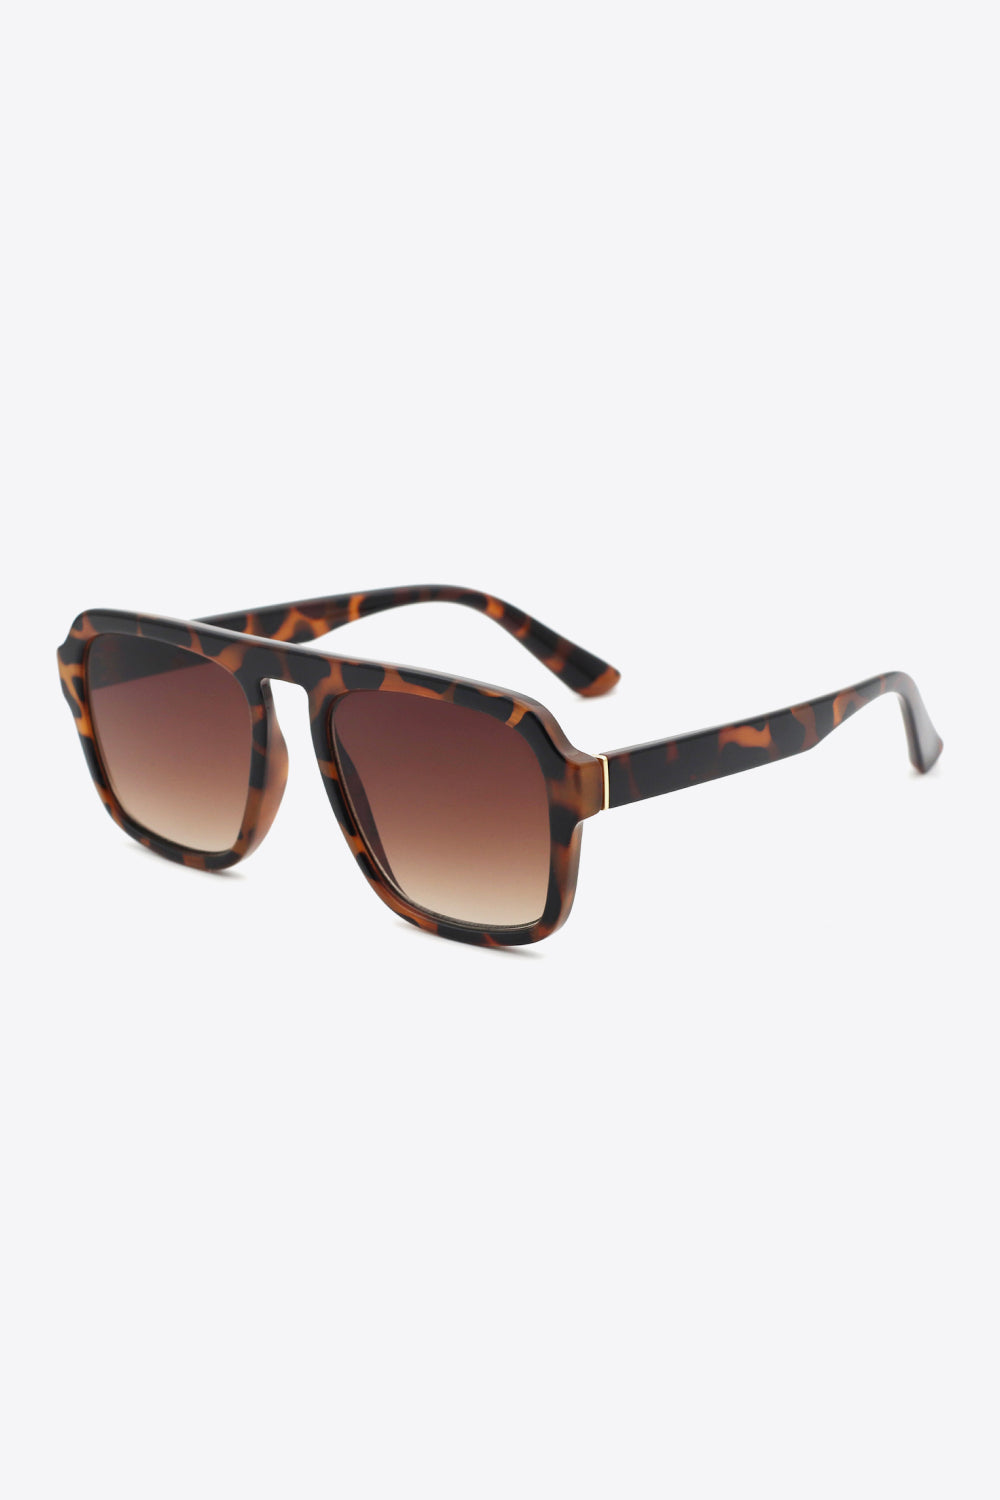 Tortoiseshell Square Polycarbonate Frame Sunglasses - BEAUTY COSMOTICS SHOP